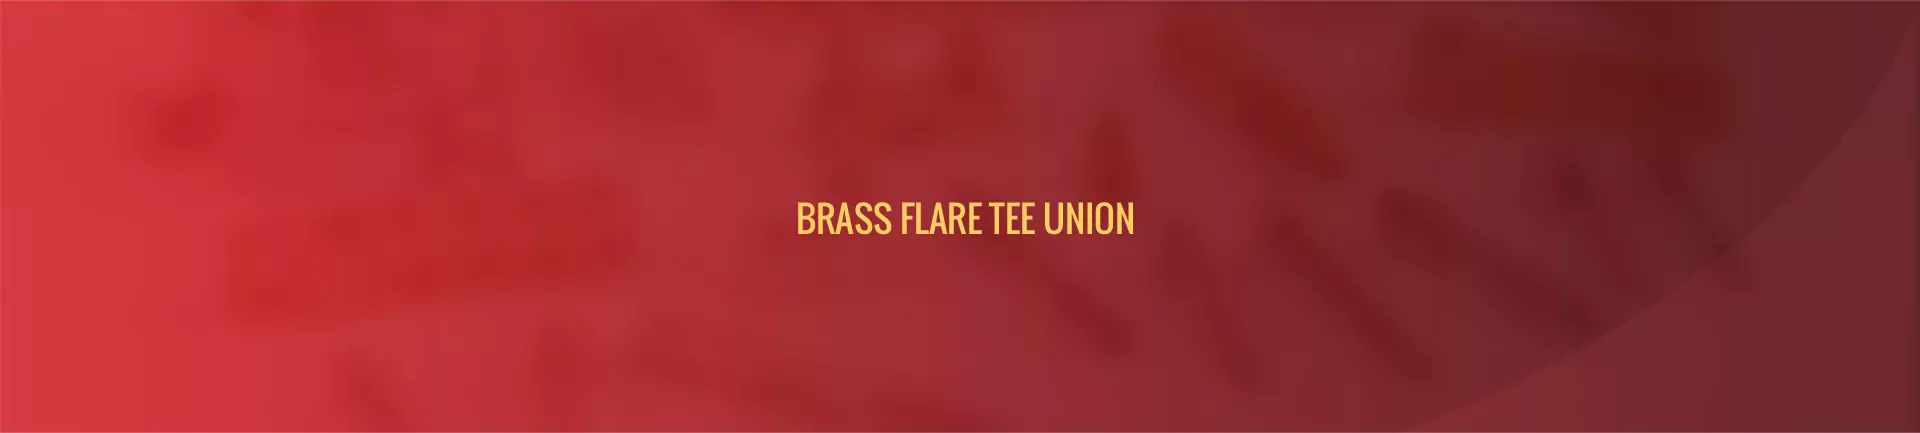 brass_flare_tee_union-banner